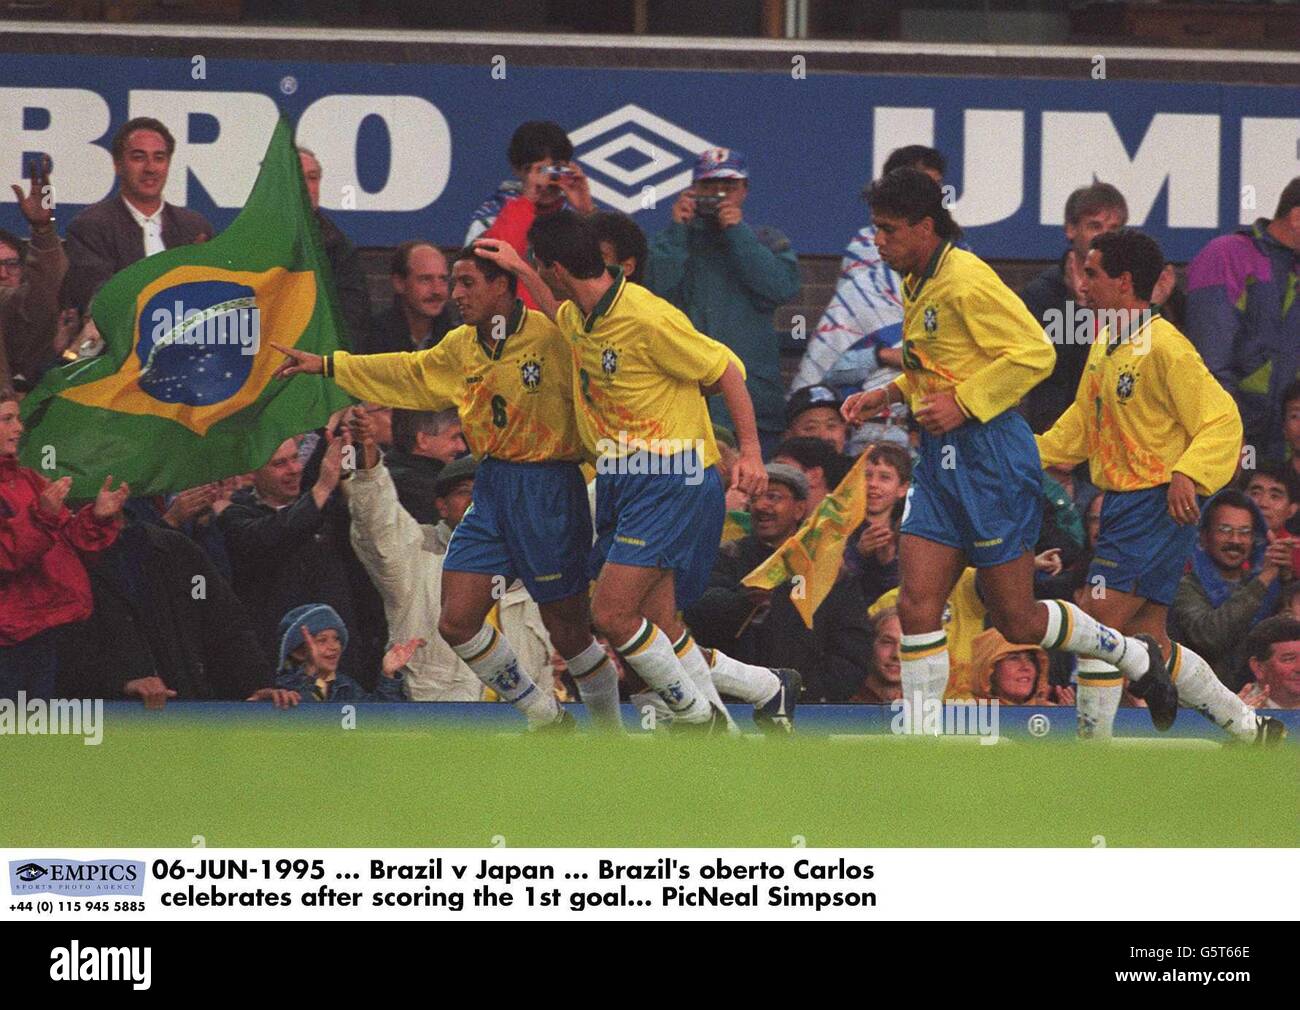 06-JUN-1995 ... Brazil v Japan ... Brazil's Roberto Carlos celebrates after scoring the 1st goal. PicNeal Simpson Stock Photo